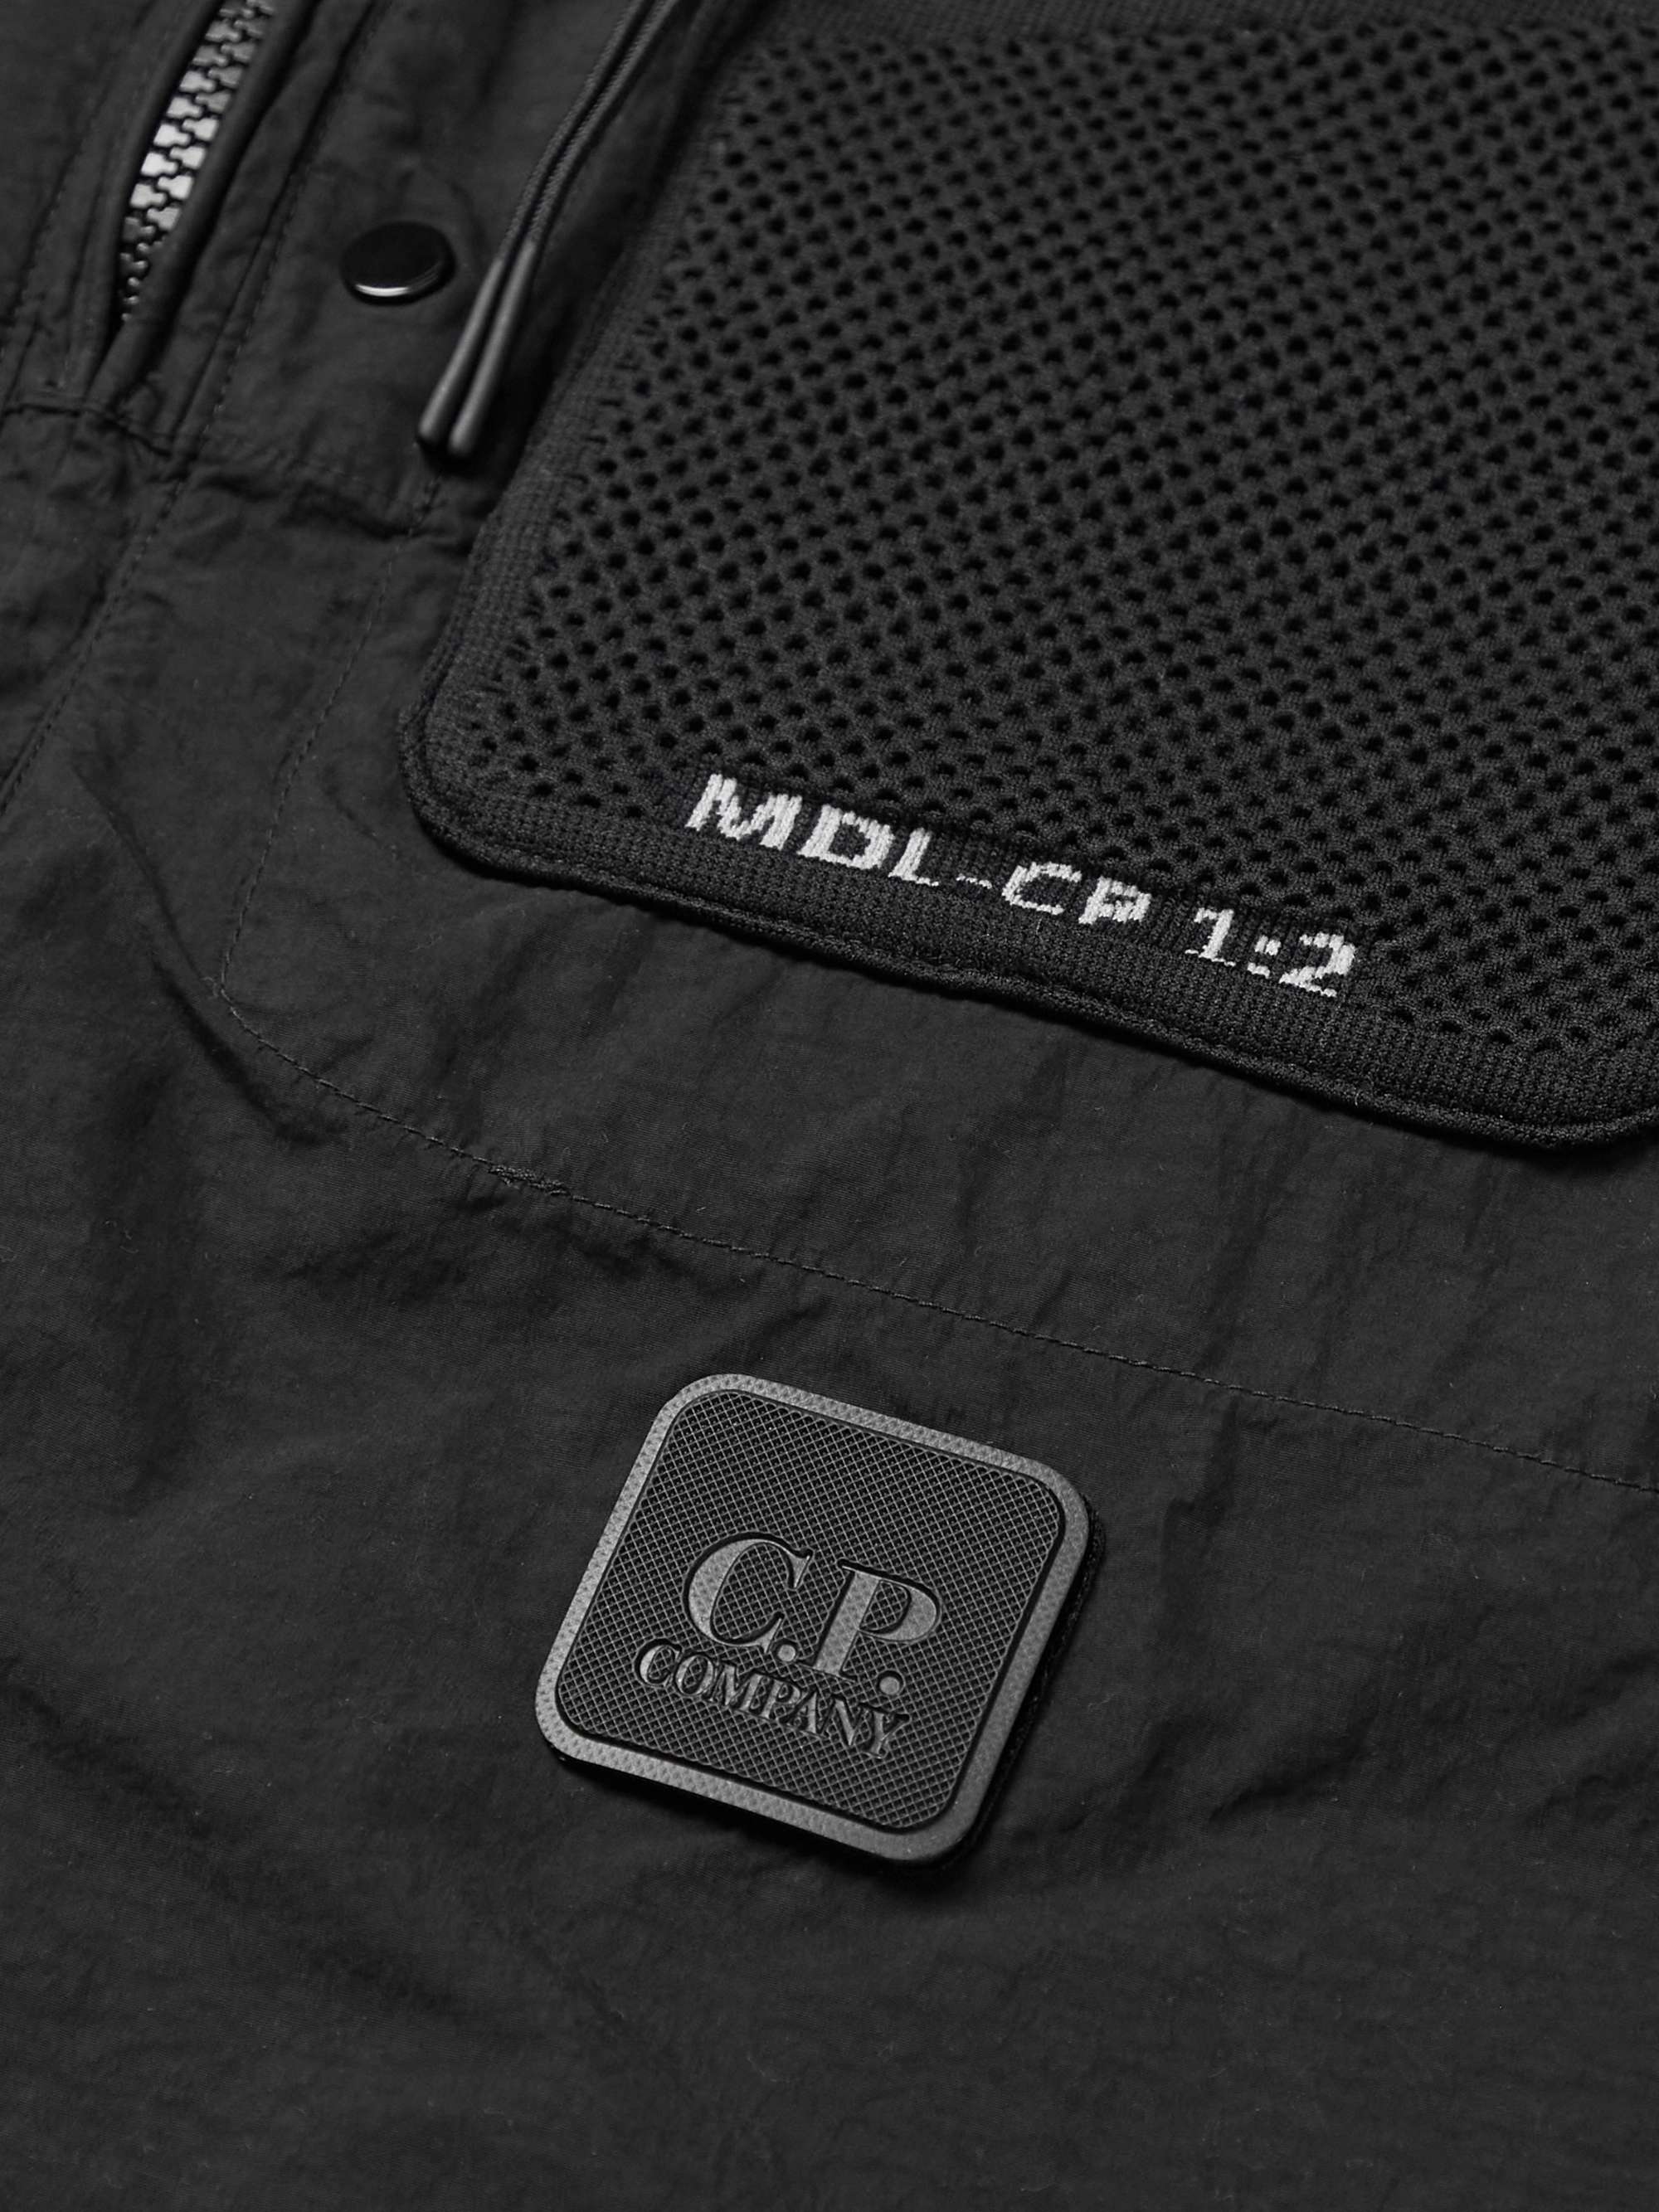 C.P. COMPANY Metropolis Mesh-Trimmed Garment-Dyed Shell Jacket